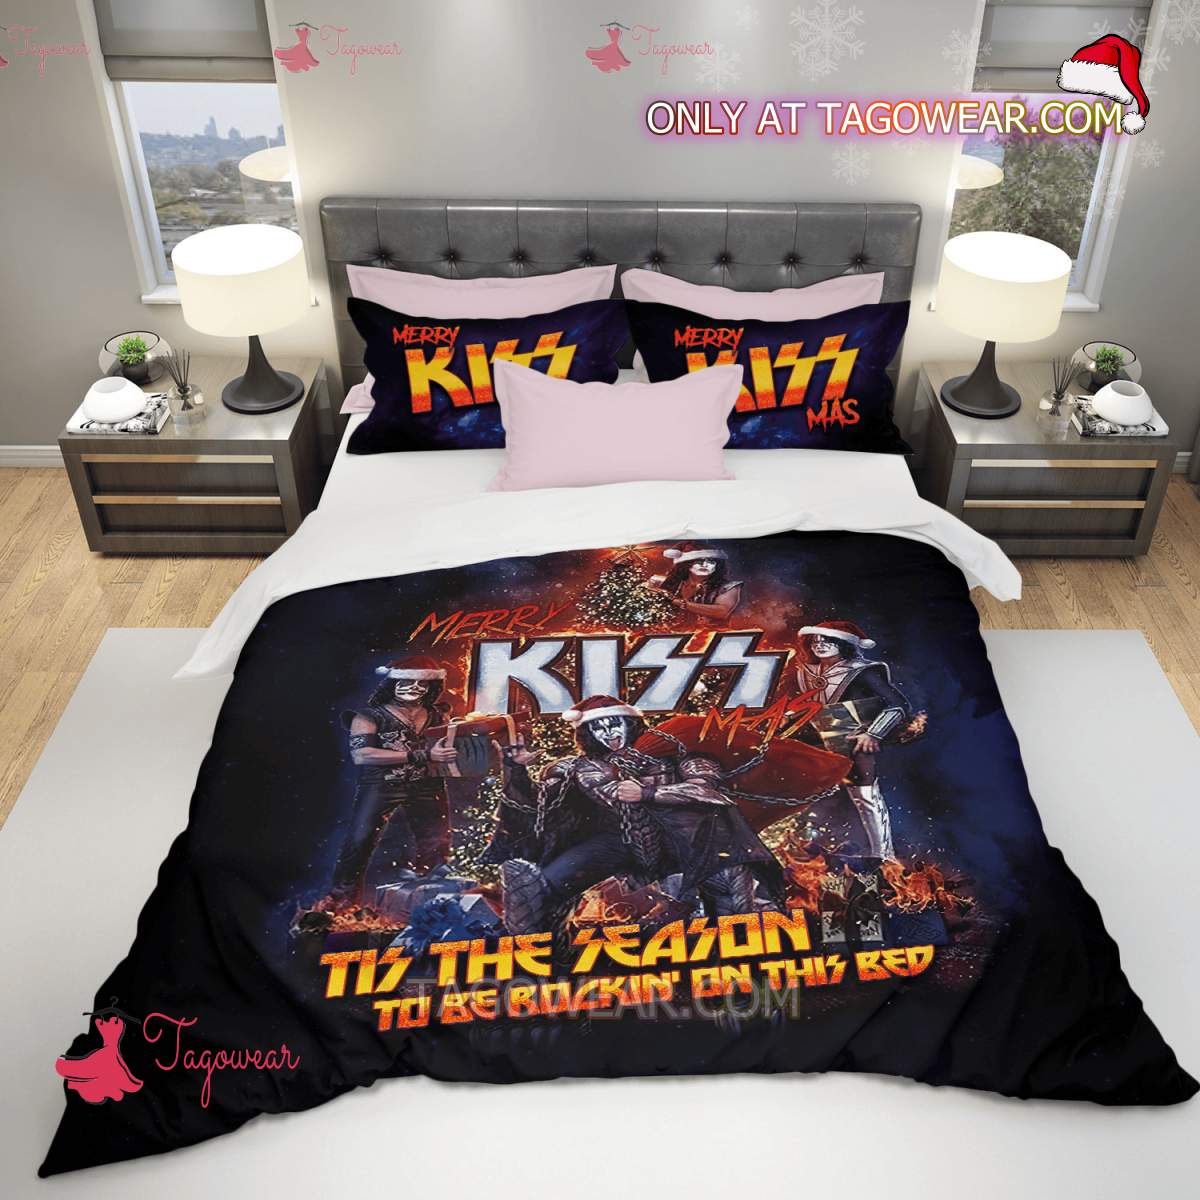 Merry Kiss Mas Tis The Season To Be Rockin' On This Bed Bedding Set a